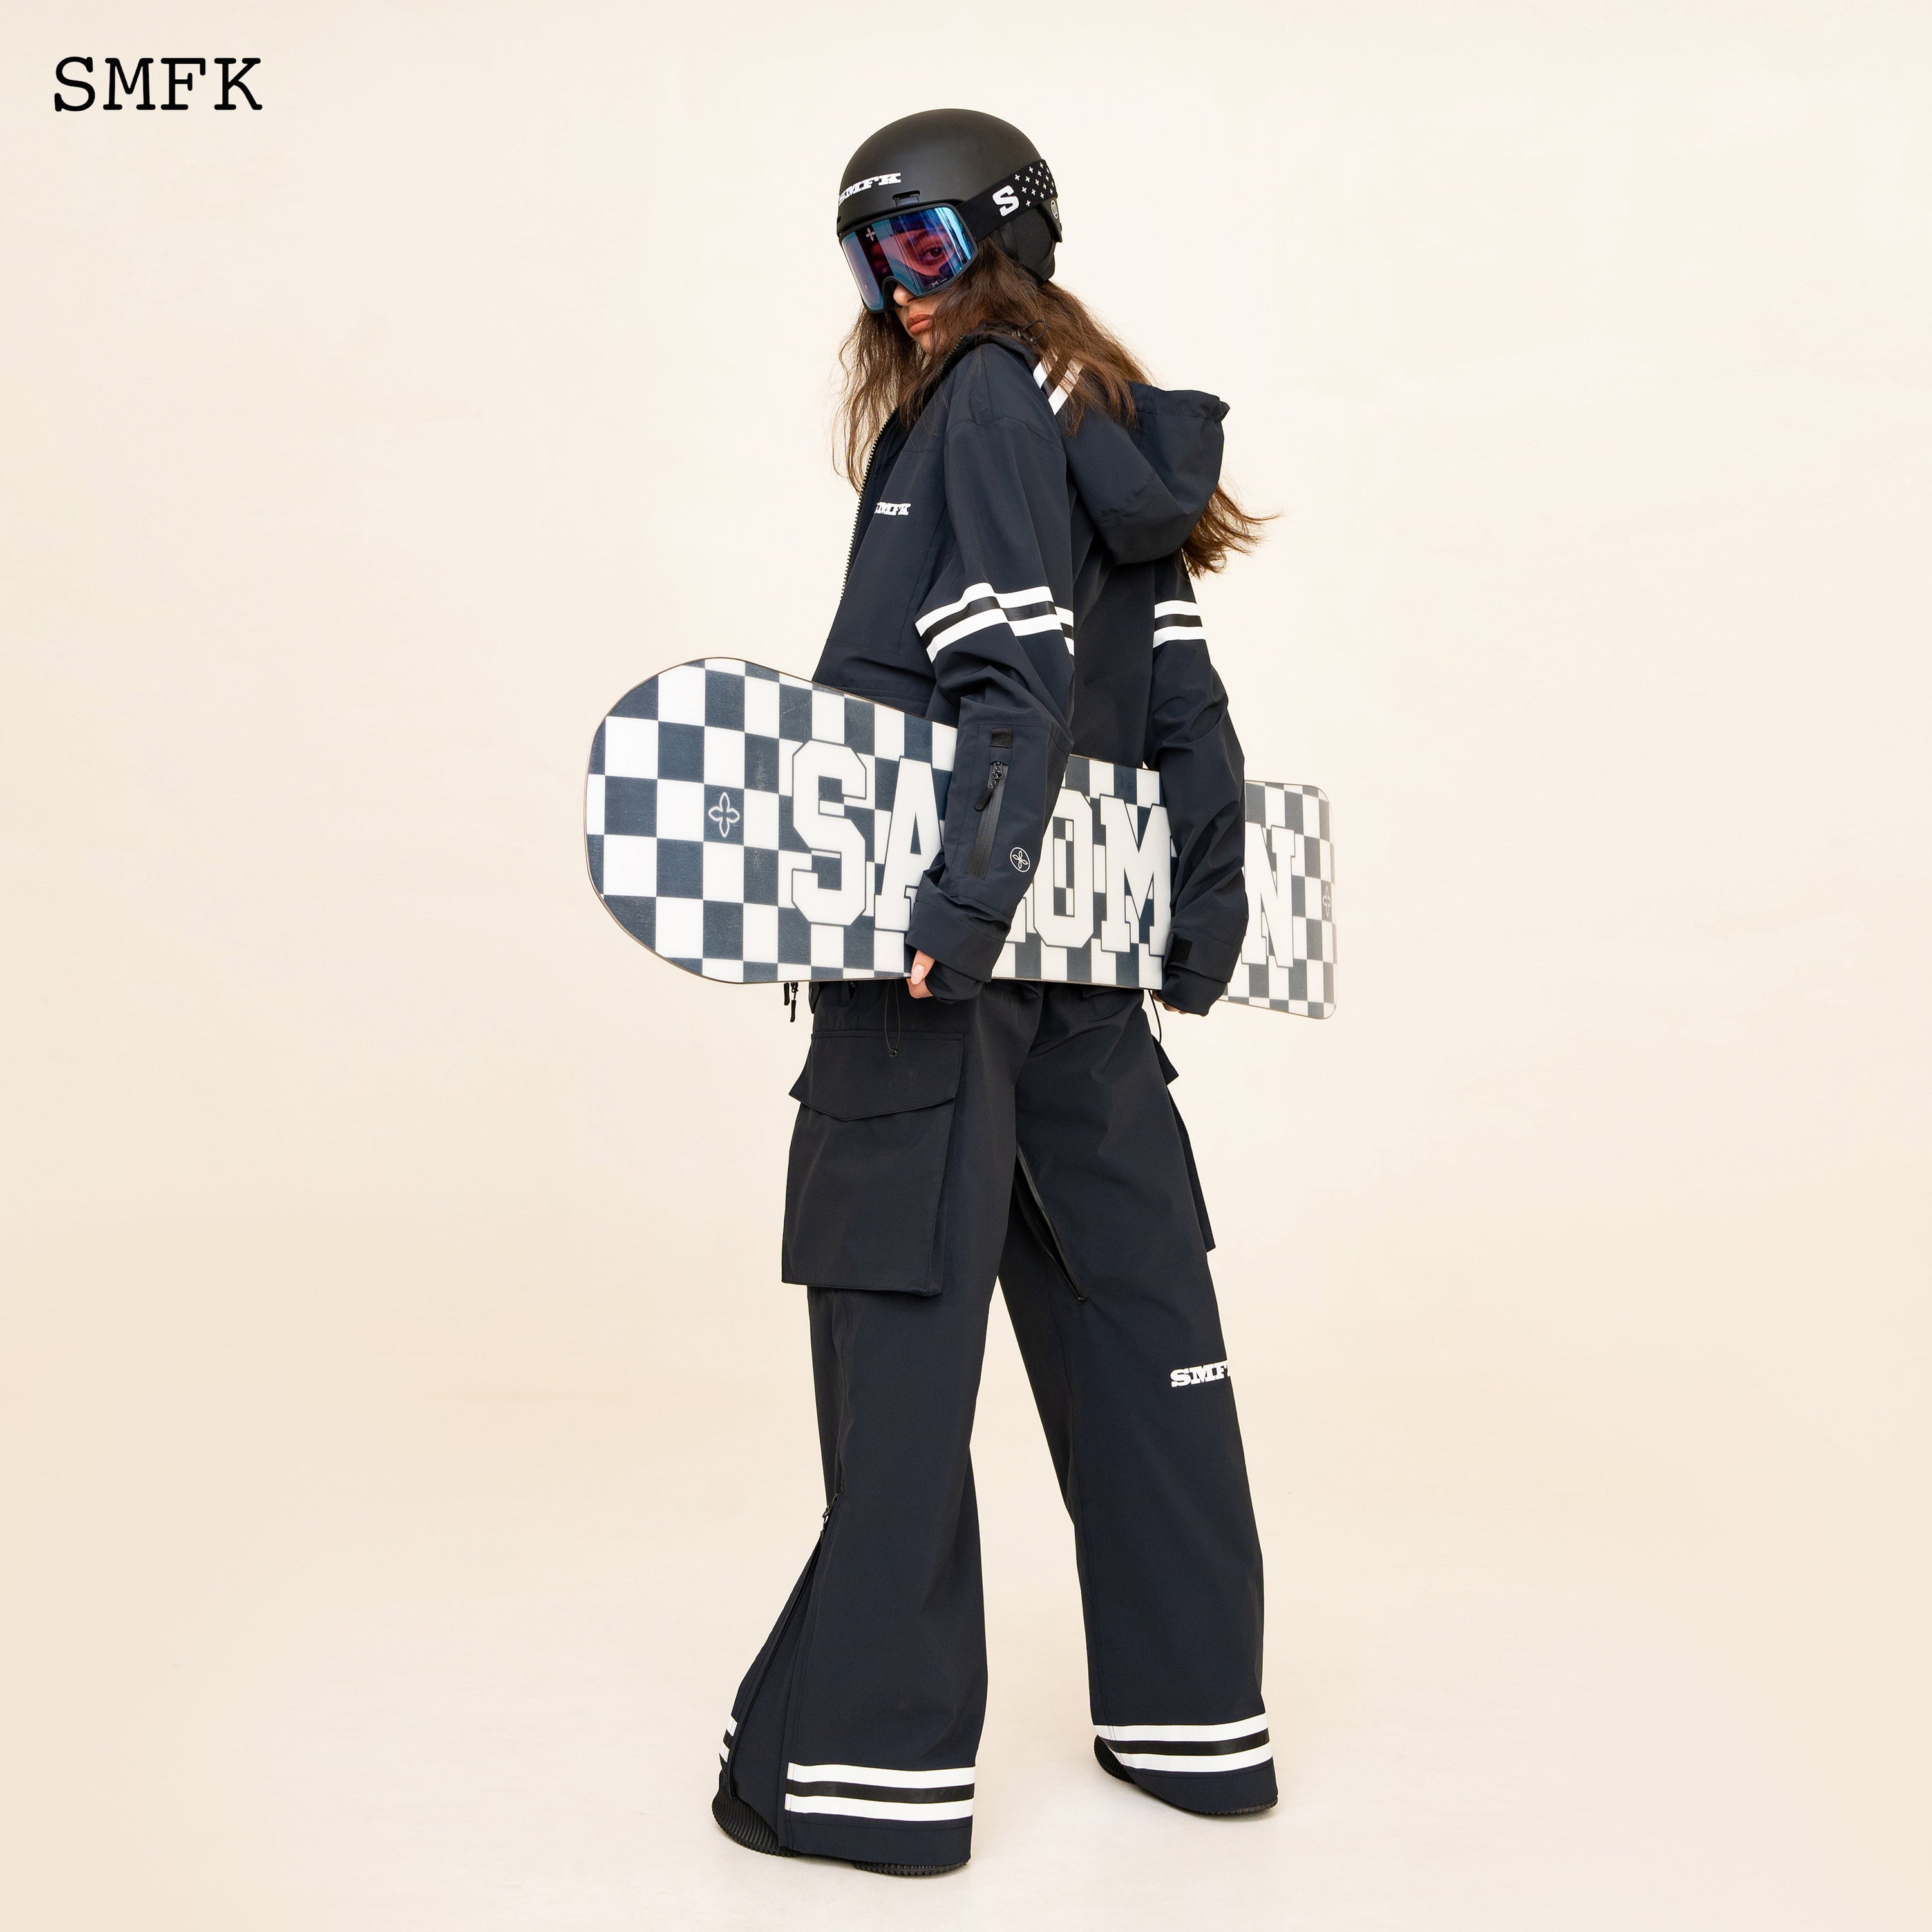 (ABSTRACT) GRID-SMFK X SALOMON Snow Board - SMFK Official